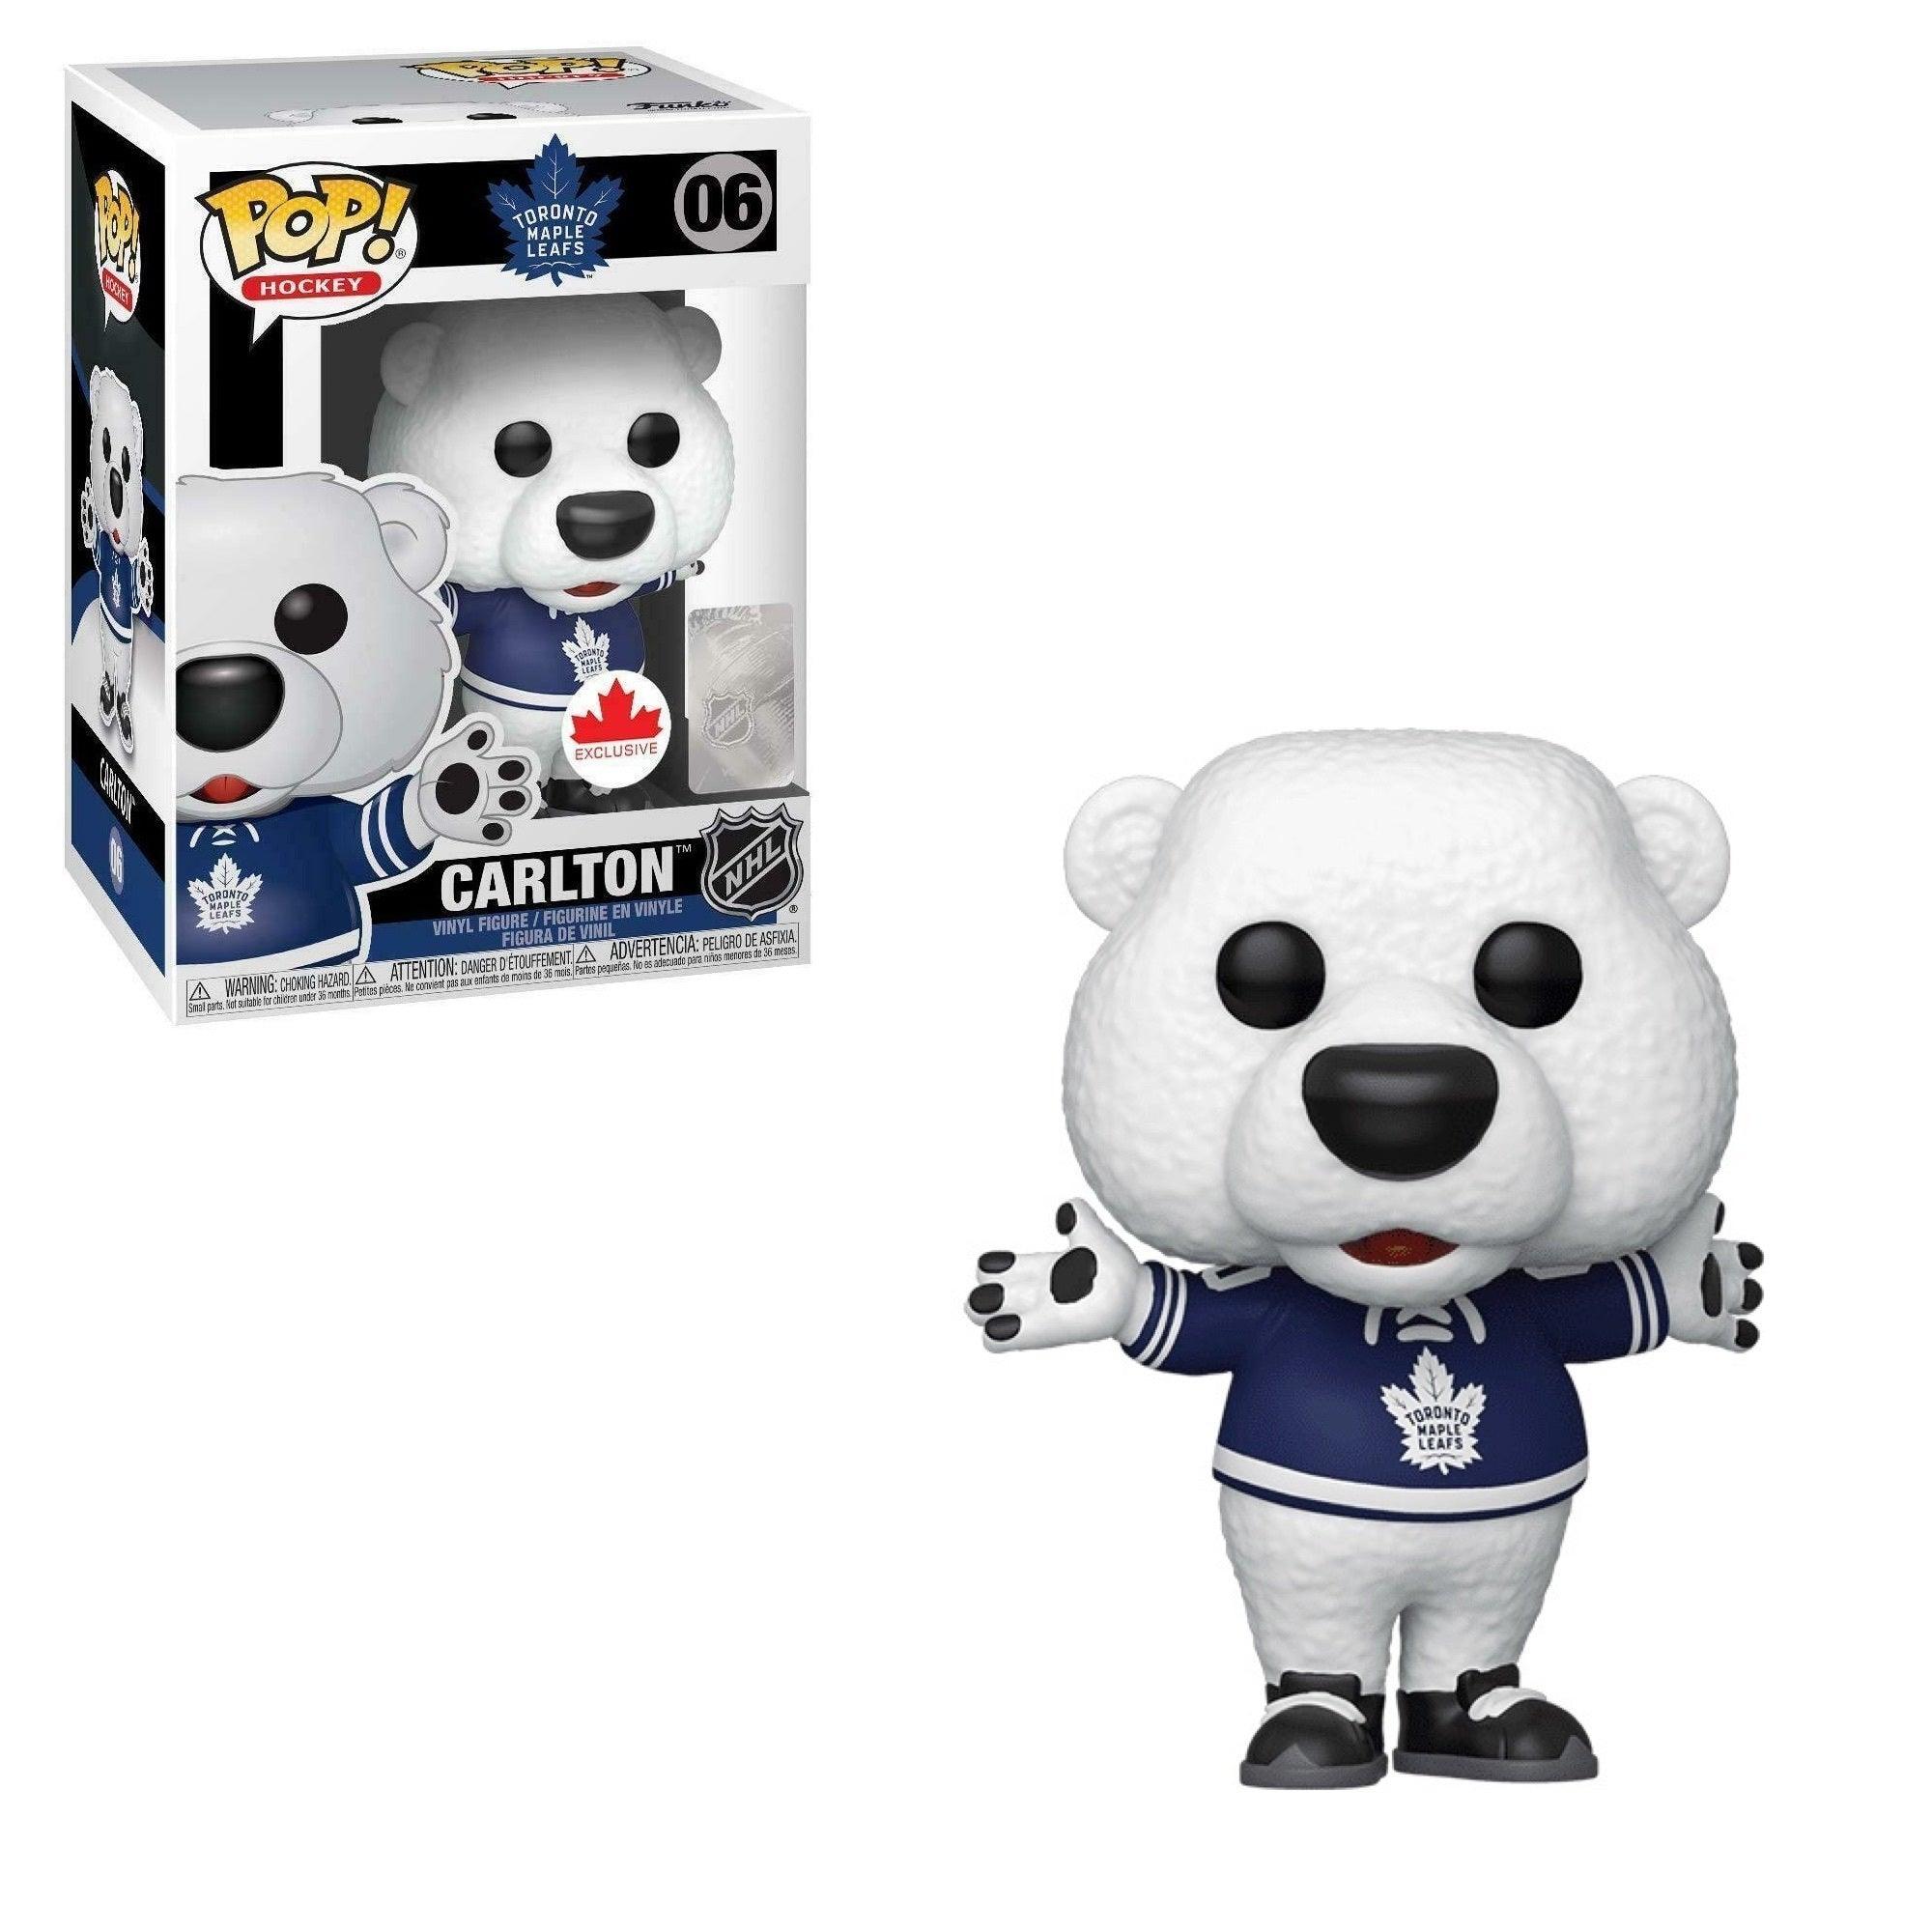 Pop! Hockey - NHL Mascot - Toronto Maple Leafs - Carlton - #06 - Canada EXCLUSIVE - Hobby Champion Inc